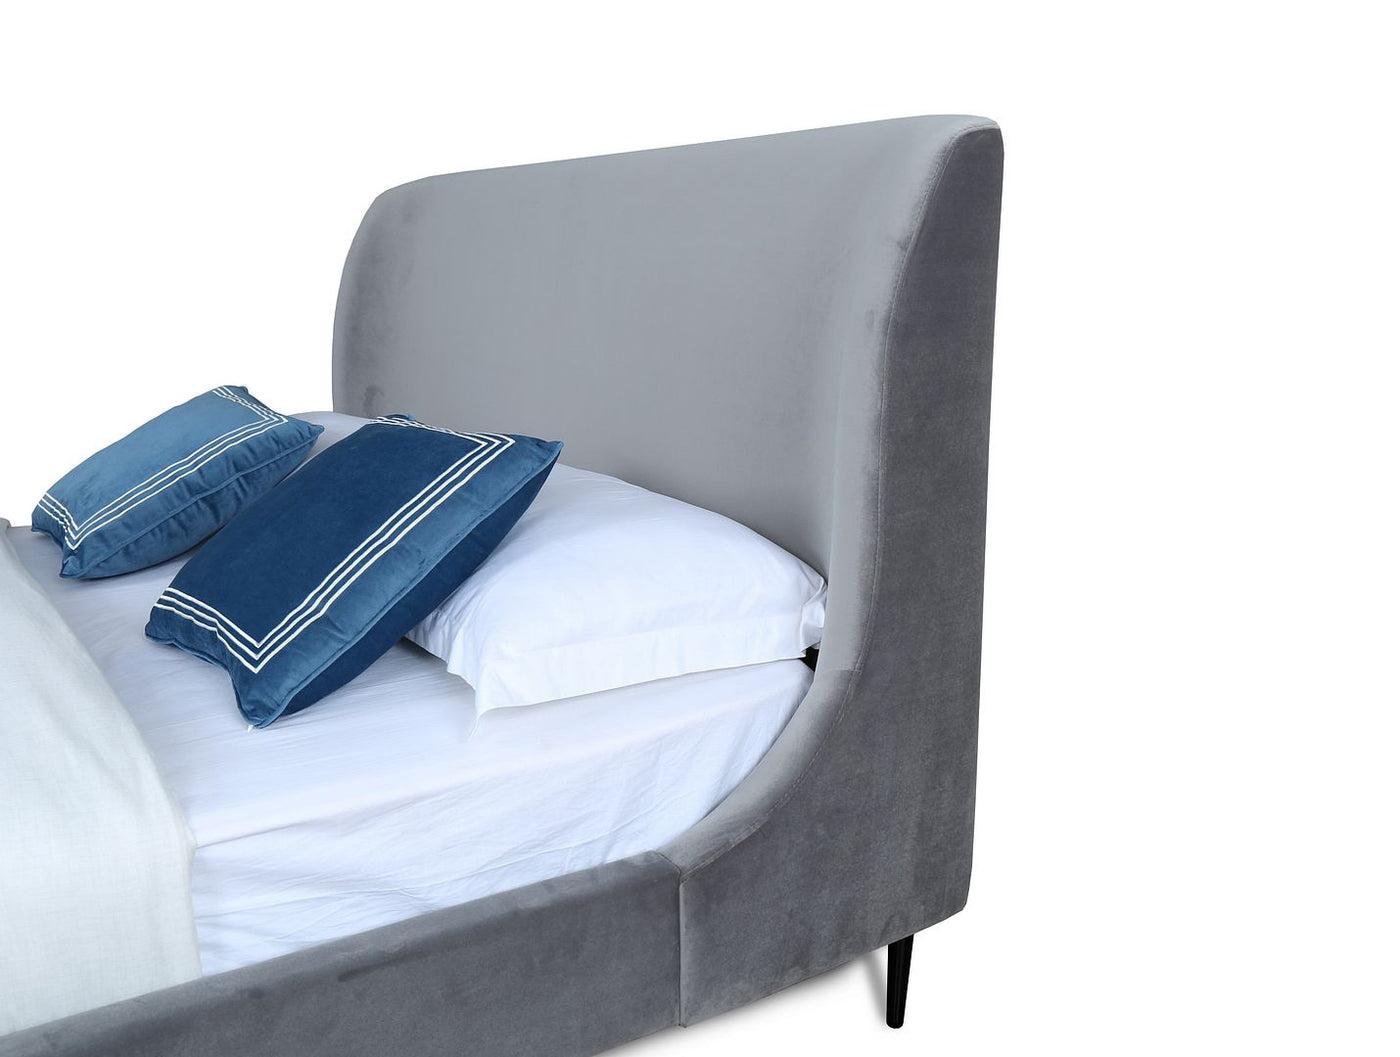 Stege Full-Size Bed - Grey/Black Legs